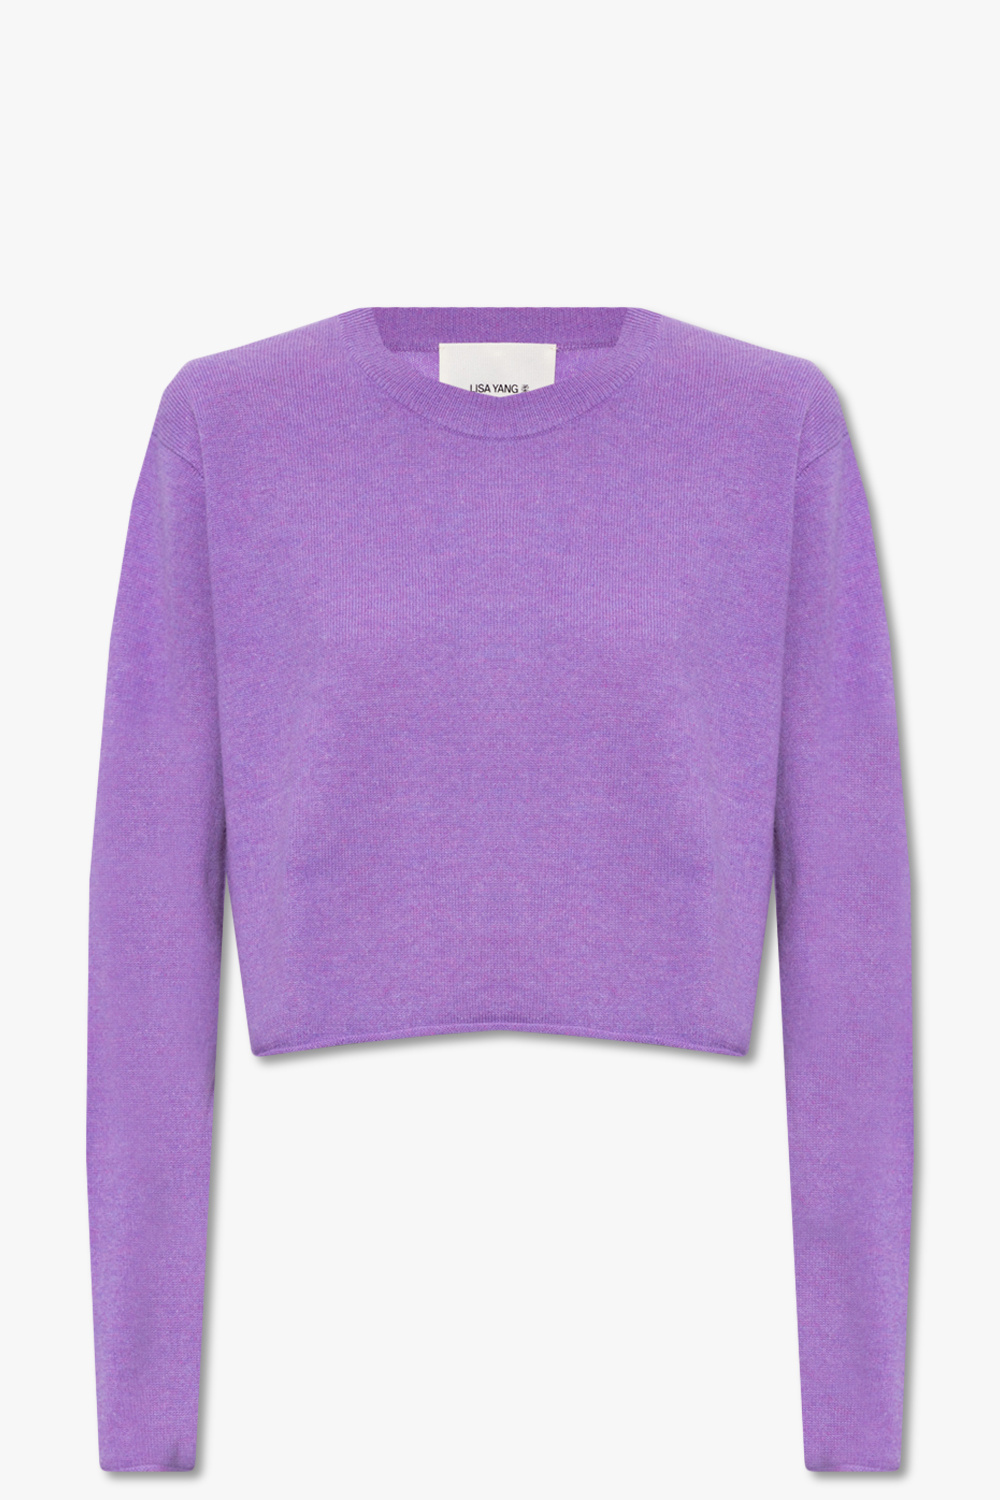 Lisa Yang ‘Chloe’ cropped sweater